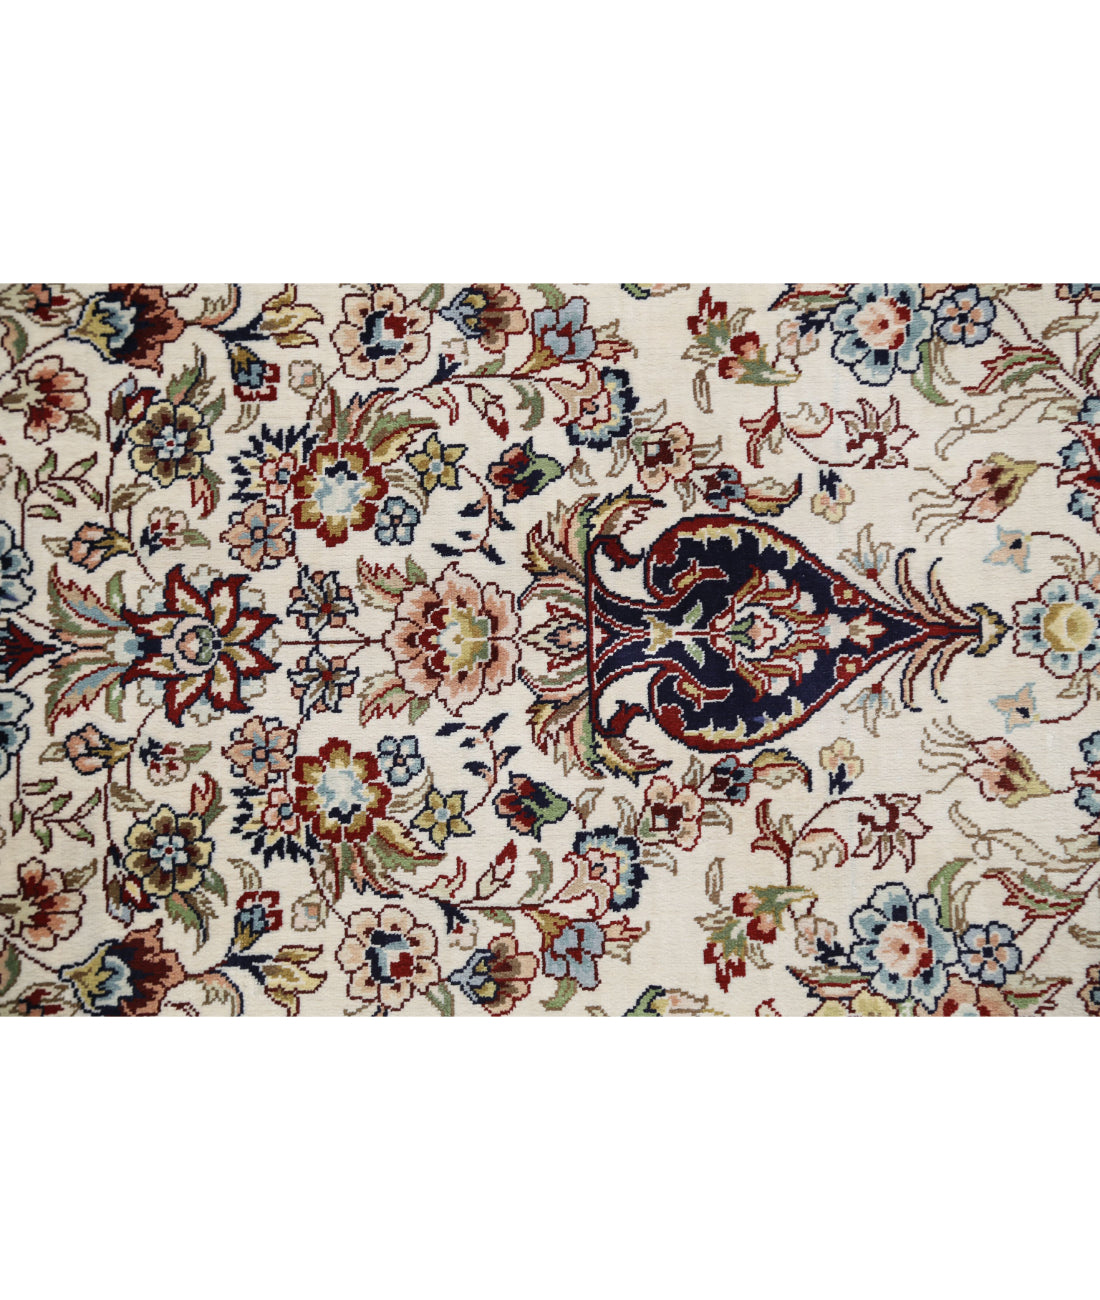 Hand Knotted Masterpiece Hereke Fine Silk Rug - 2'7'' x 4'0'' 2'7'' x 4'0'' (78 X 120) / Ivory / Red